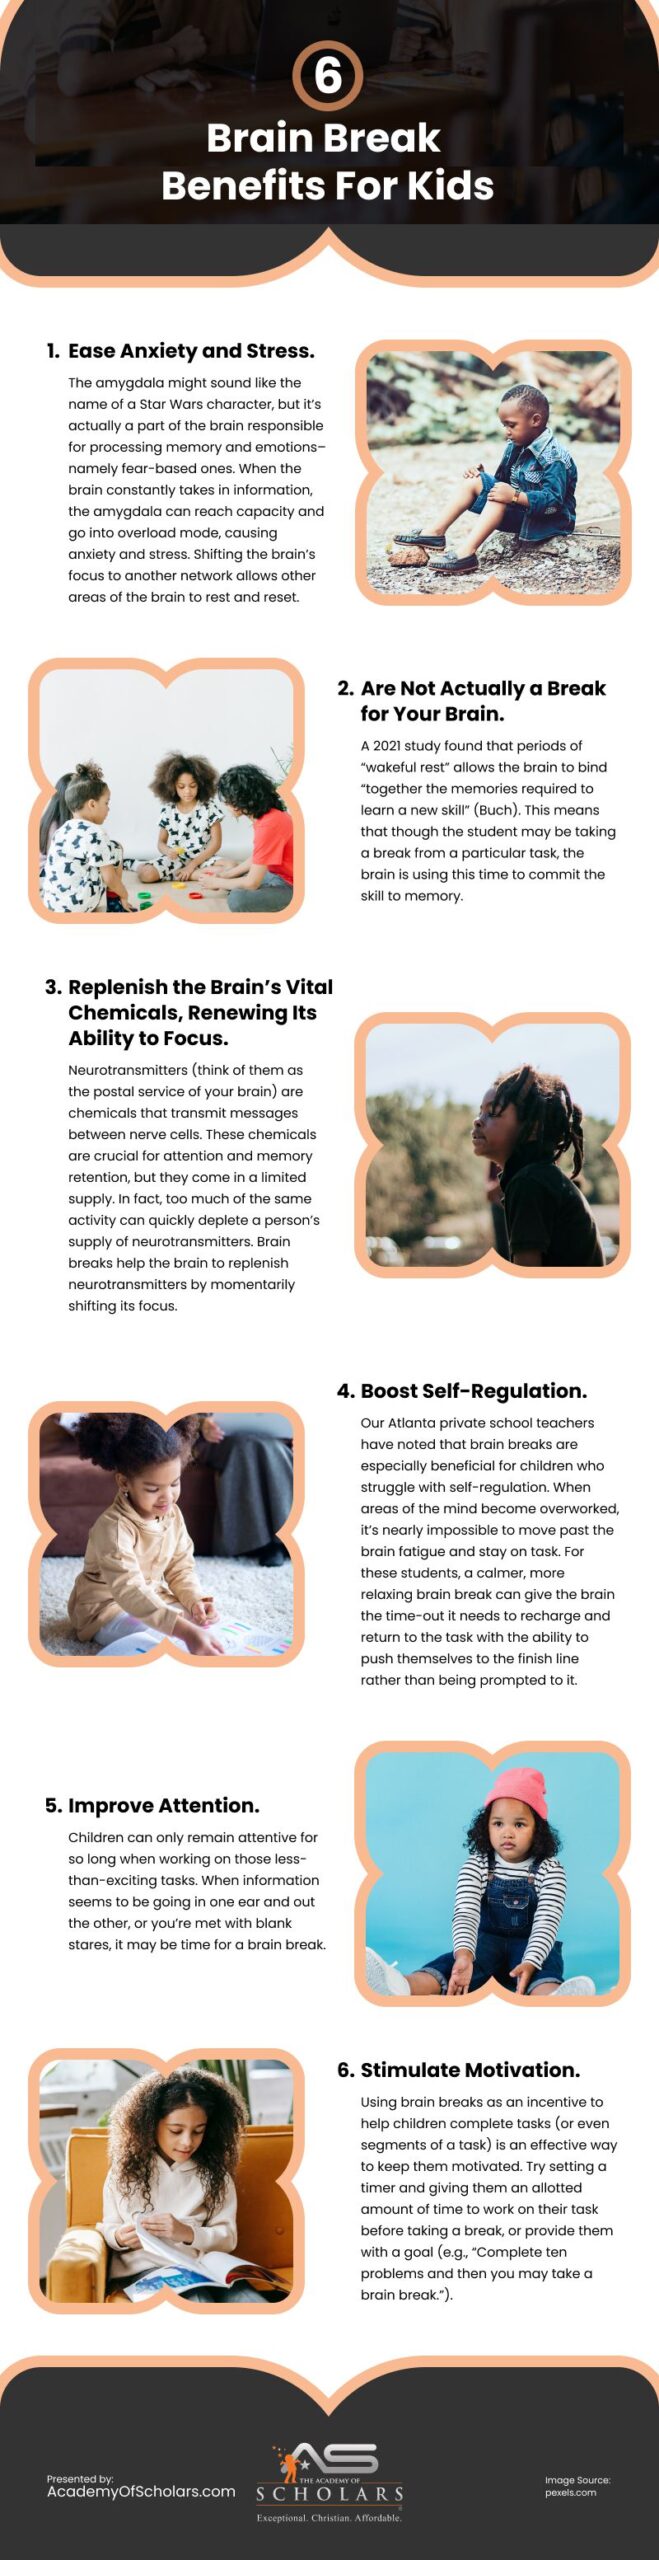 6 Brain Break Benefits for Kids Infographic